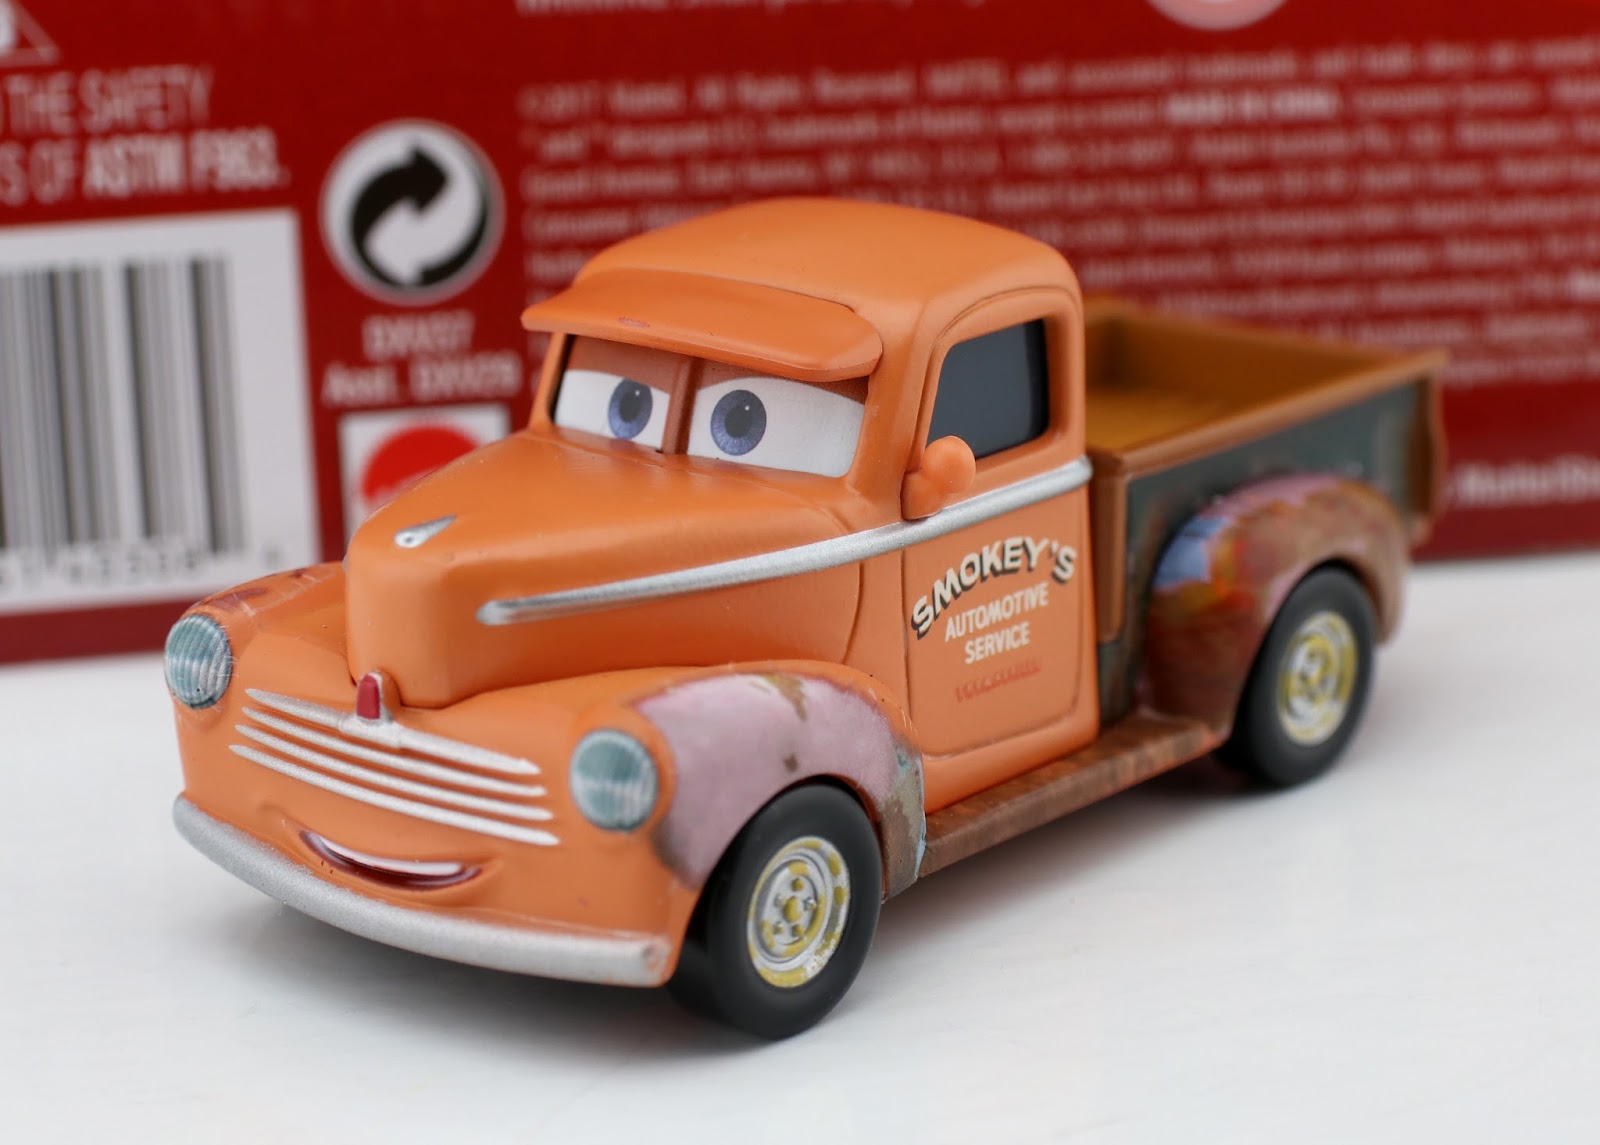 Mattel Disney Pixar Cars 3 SMOKEY Smokey's Automotive Service Truck